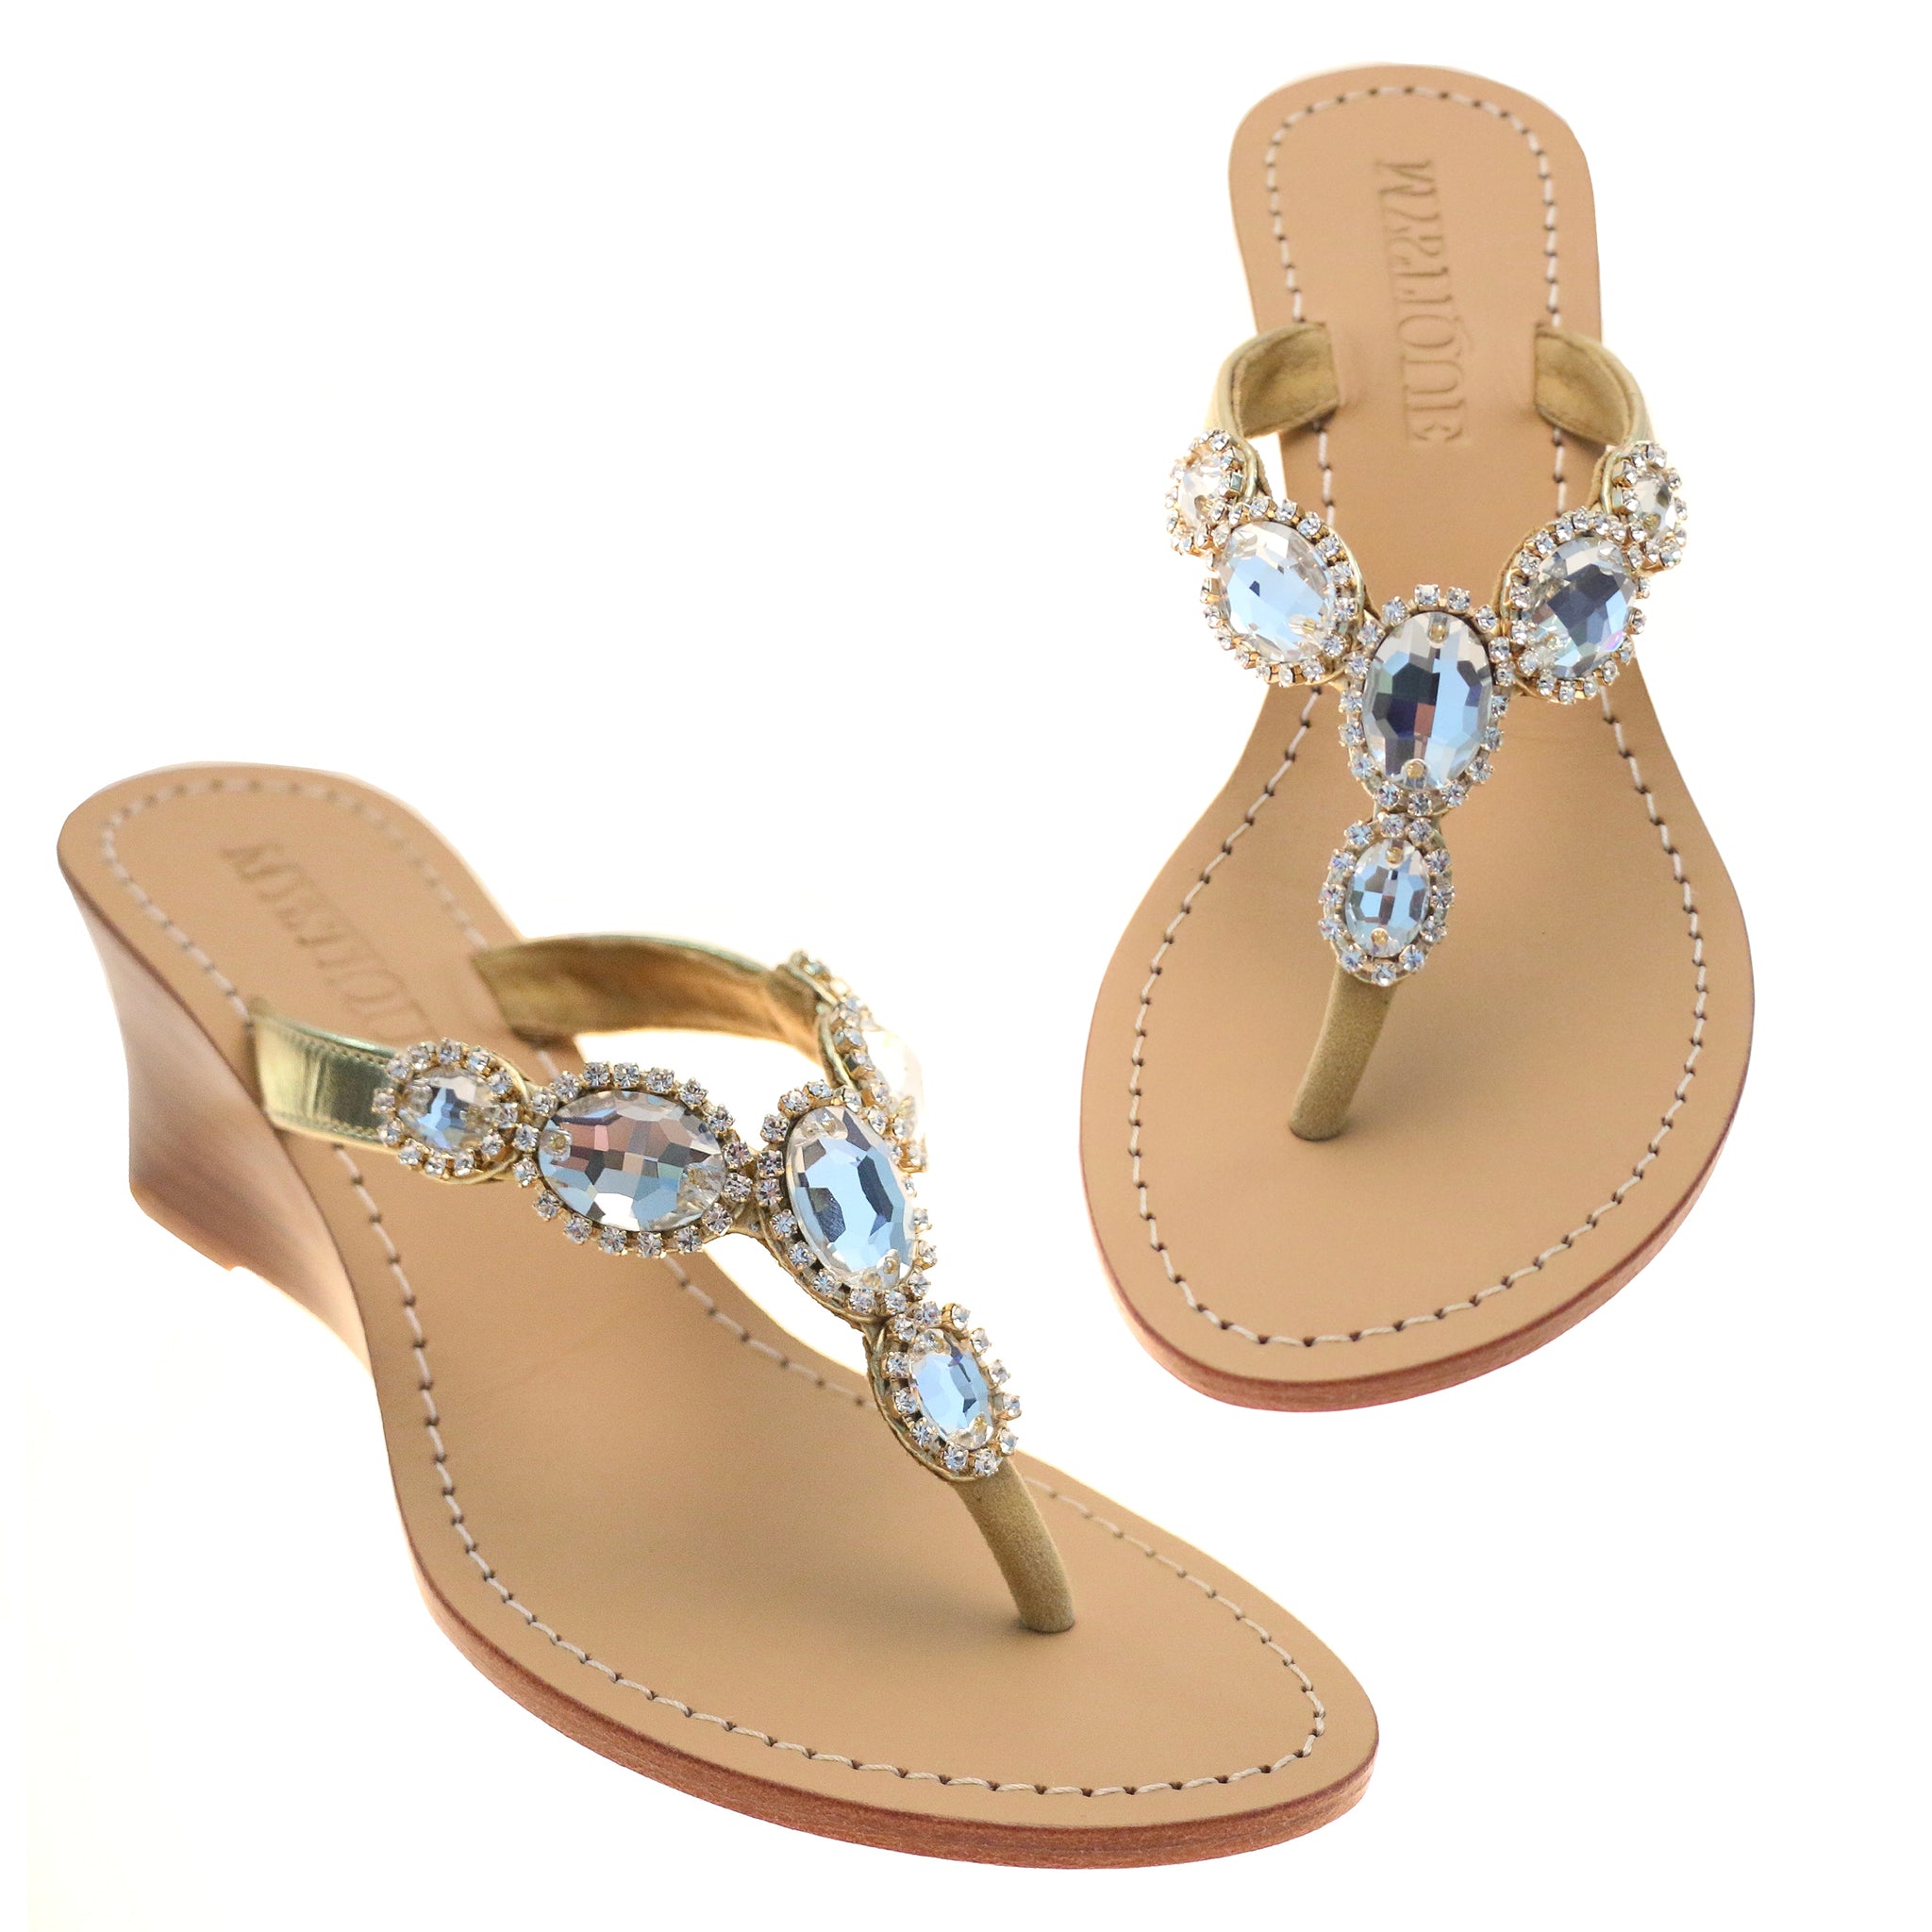 Bahamas - Women's Jeweled Wedge Sandals - Mystique Sandals